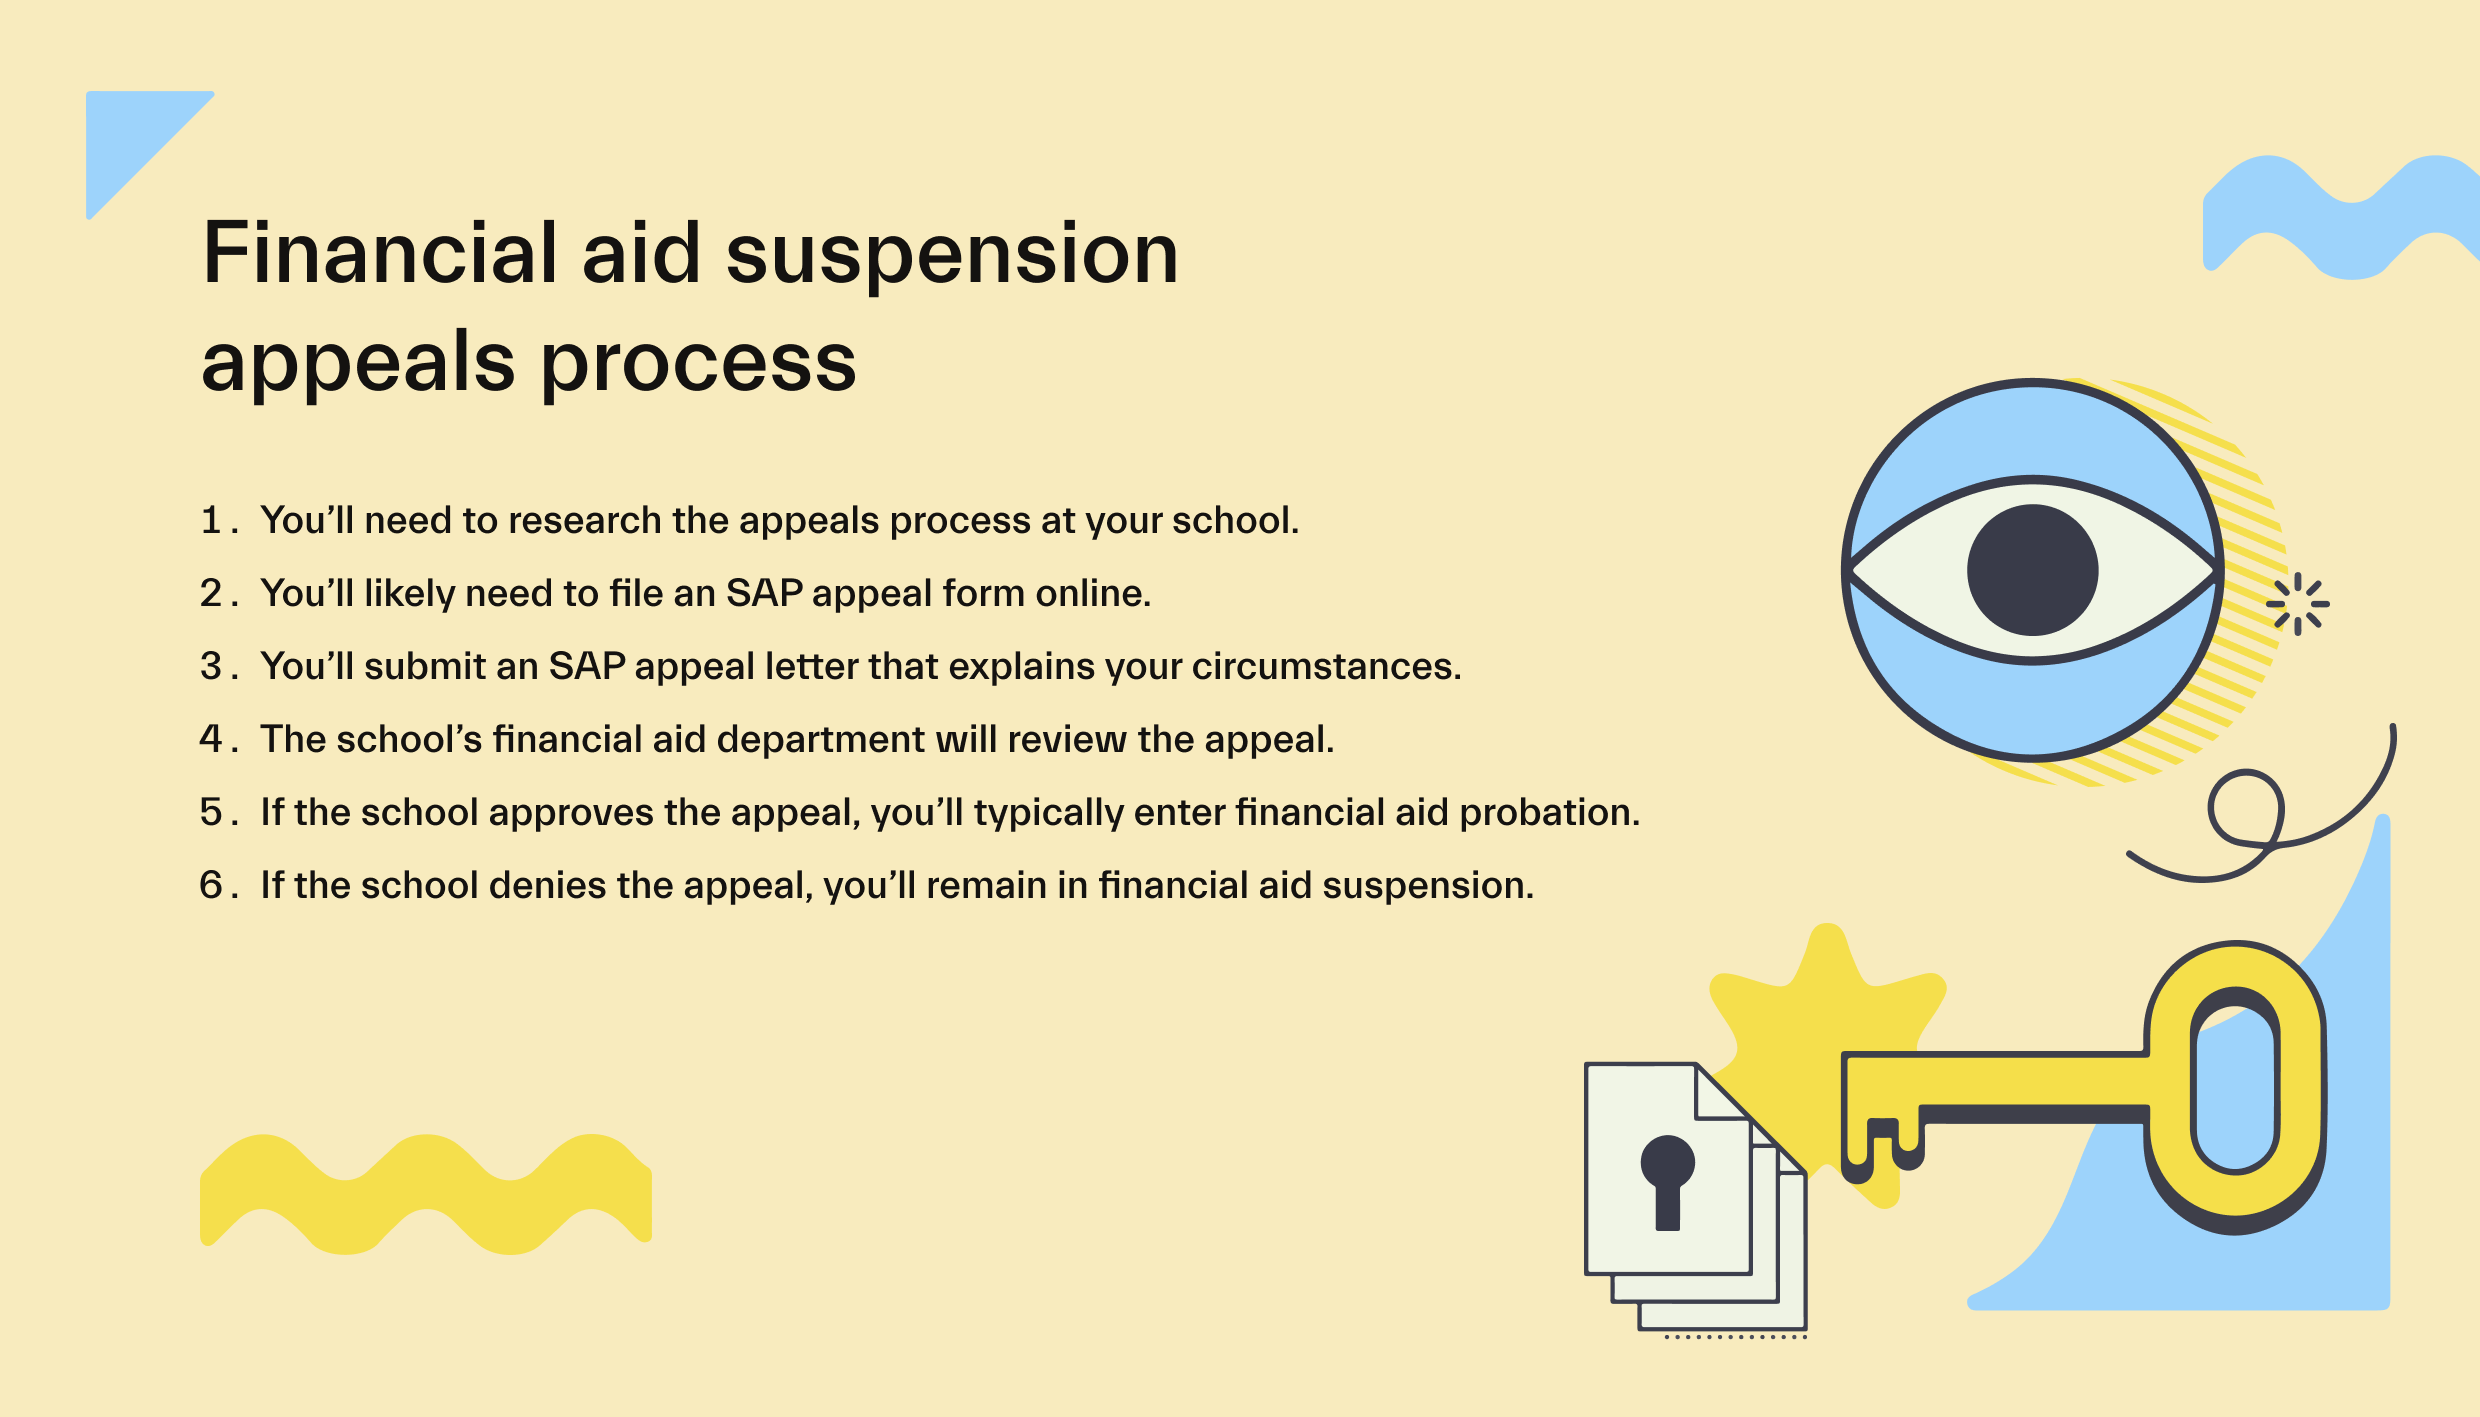 Financial aid suspension appeals process